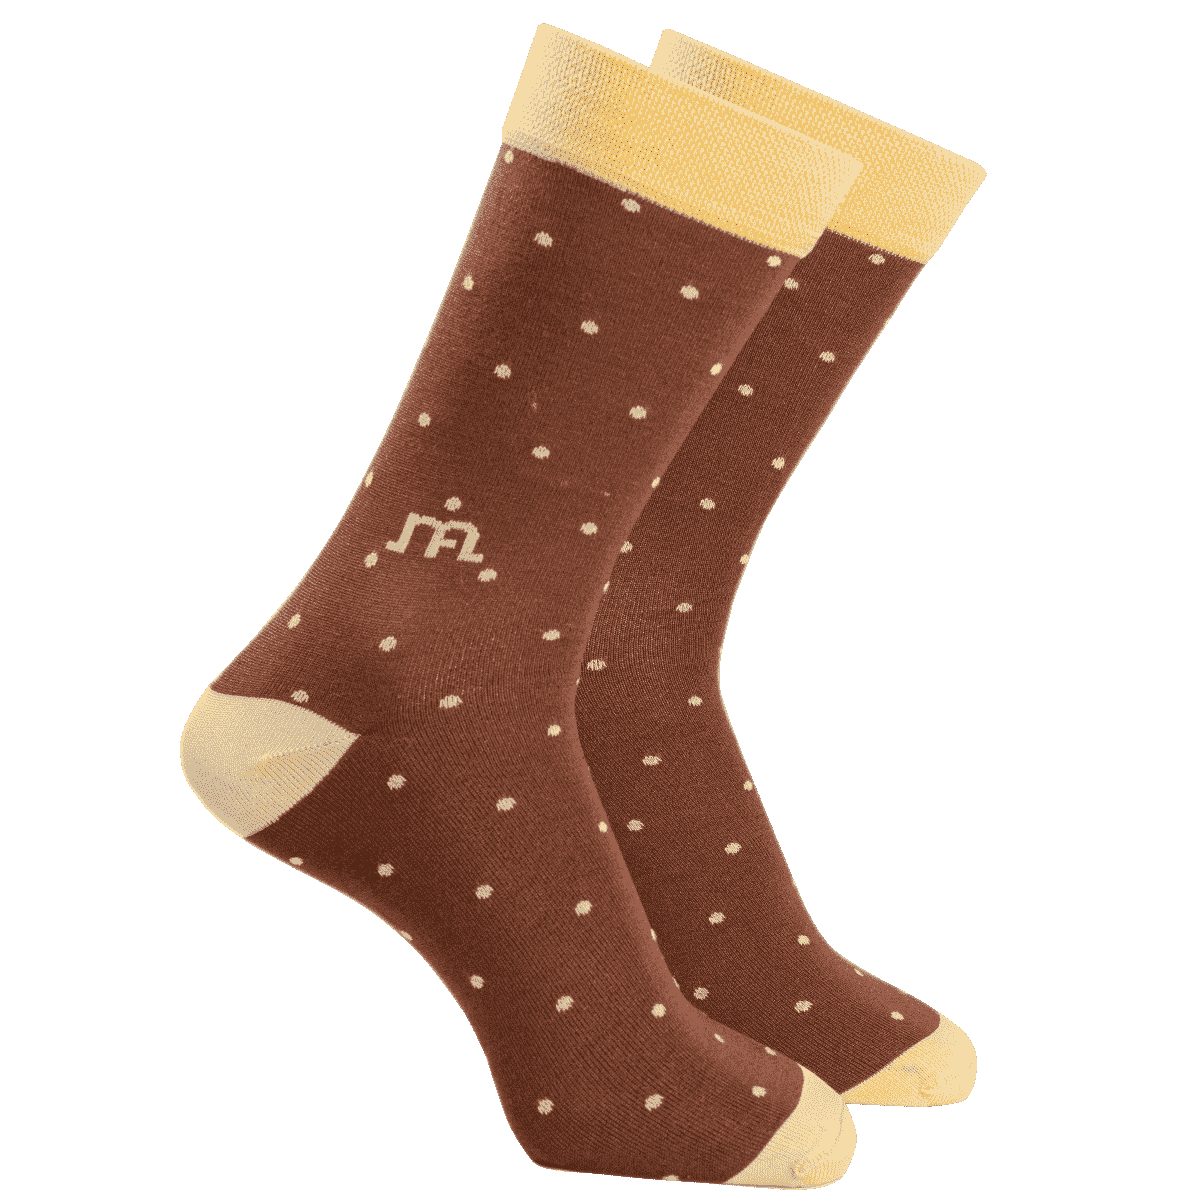 Premium Designer Socks For Men  Made with Scottish Lisle Cotton